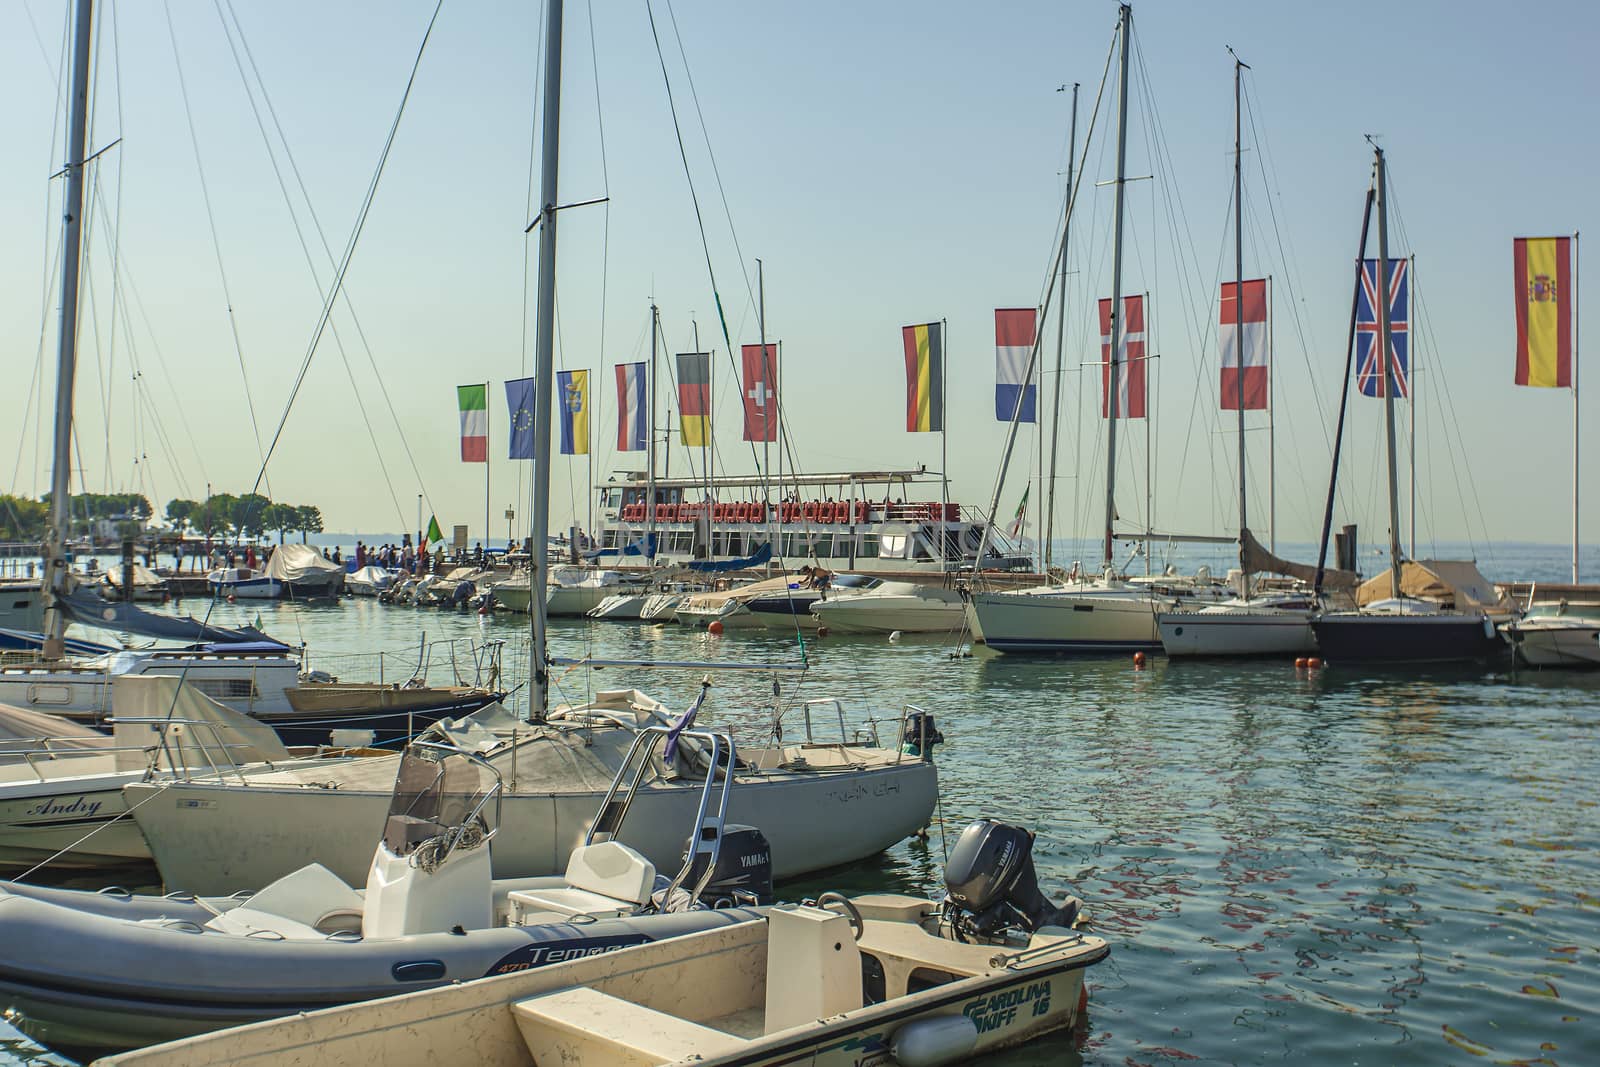 BARDOLINO, ITALY 16 SEPTEMBER 2020: Port on Garda Lake of Bardolino with boats